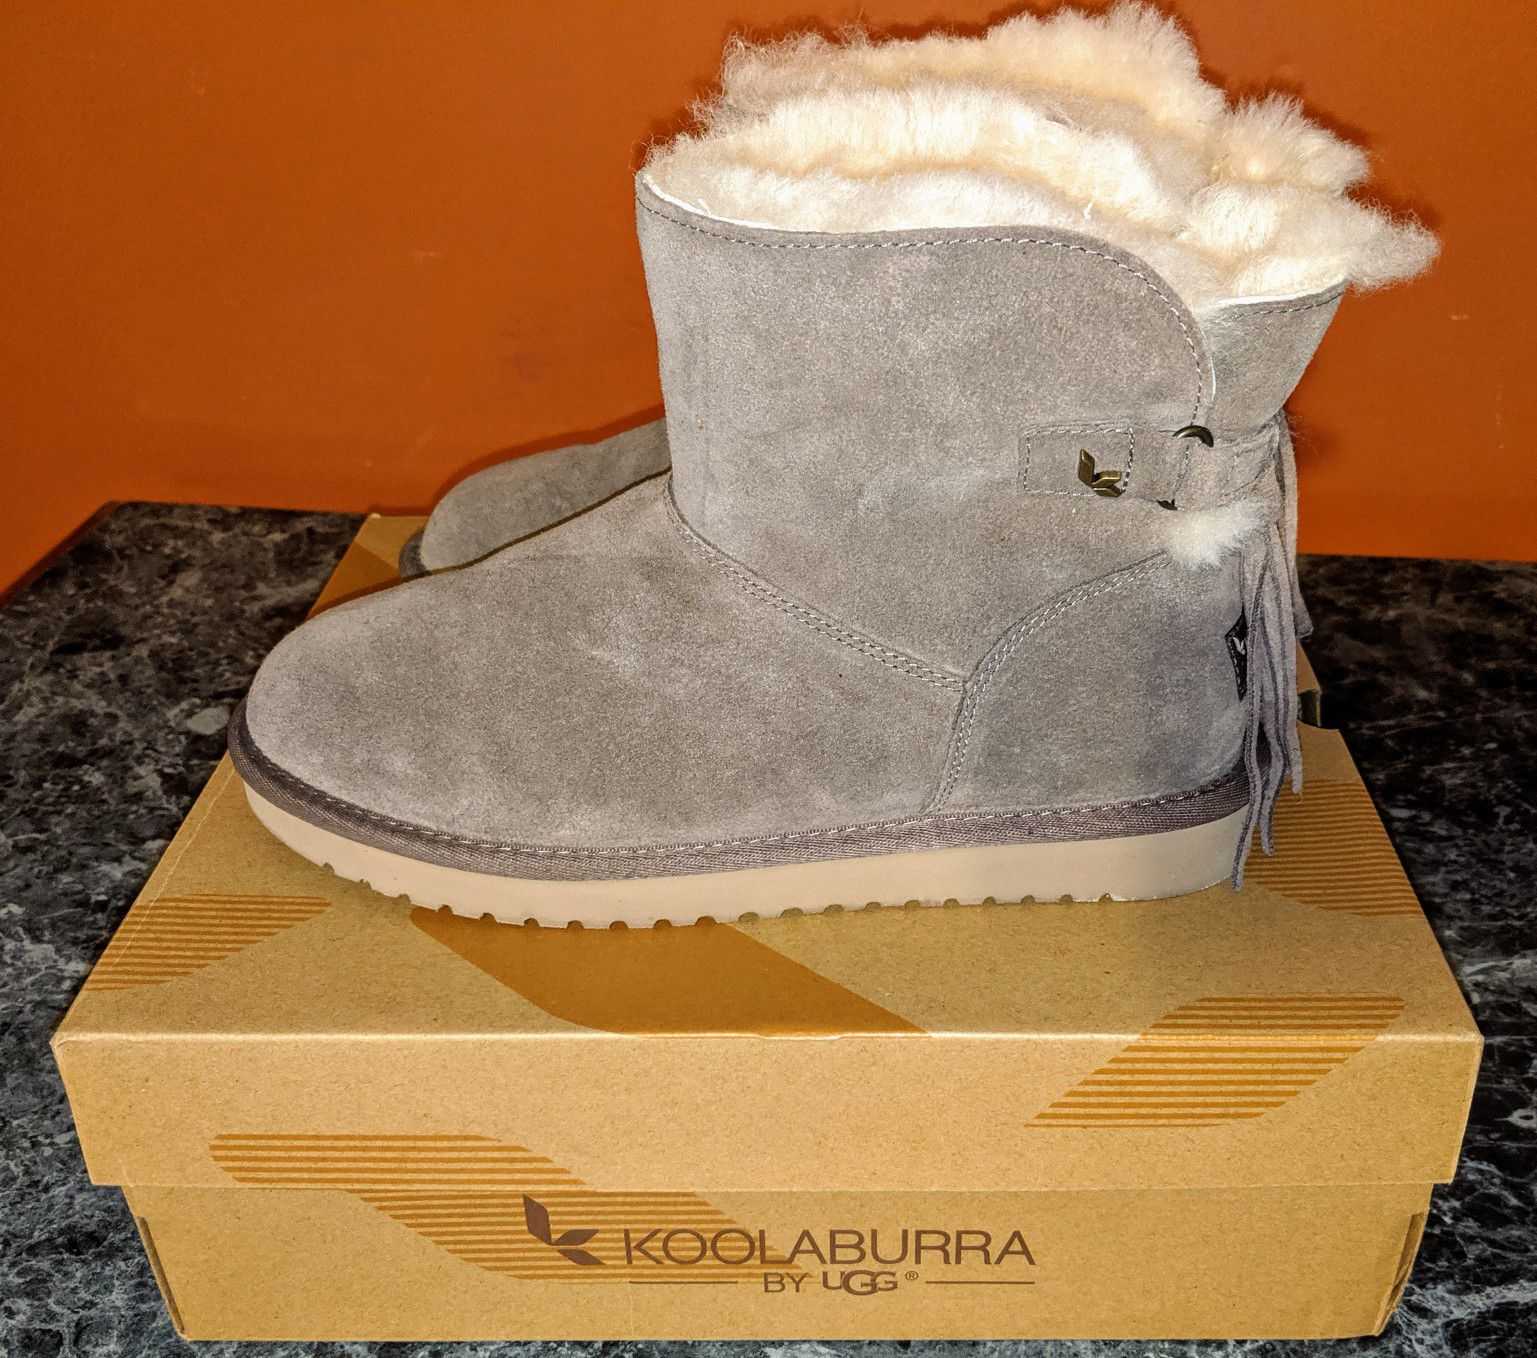 Koolaburra by UGG Women's Winter Boots - Size 9